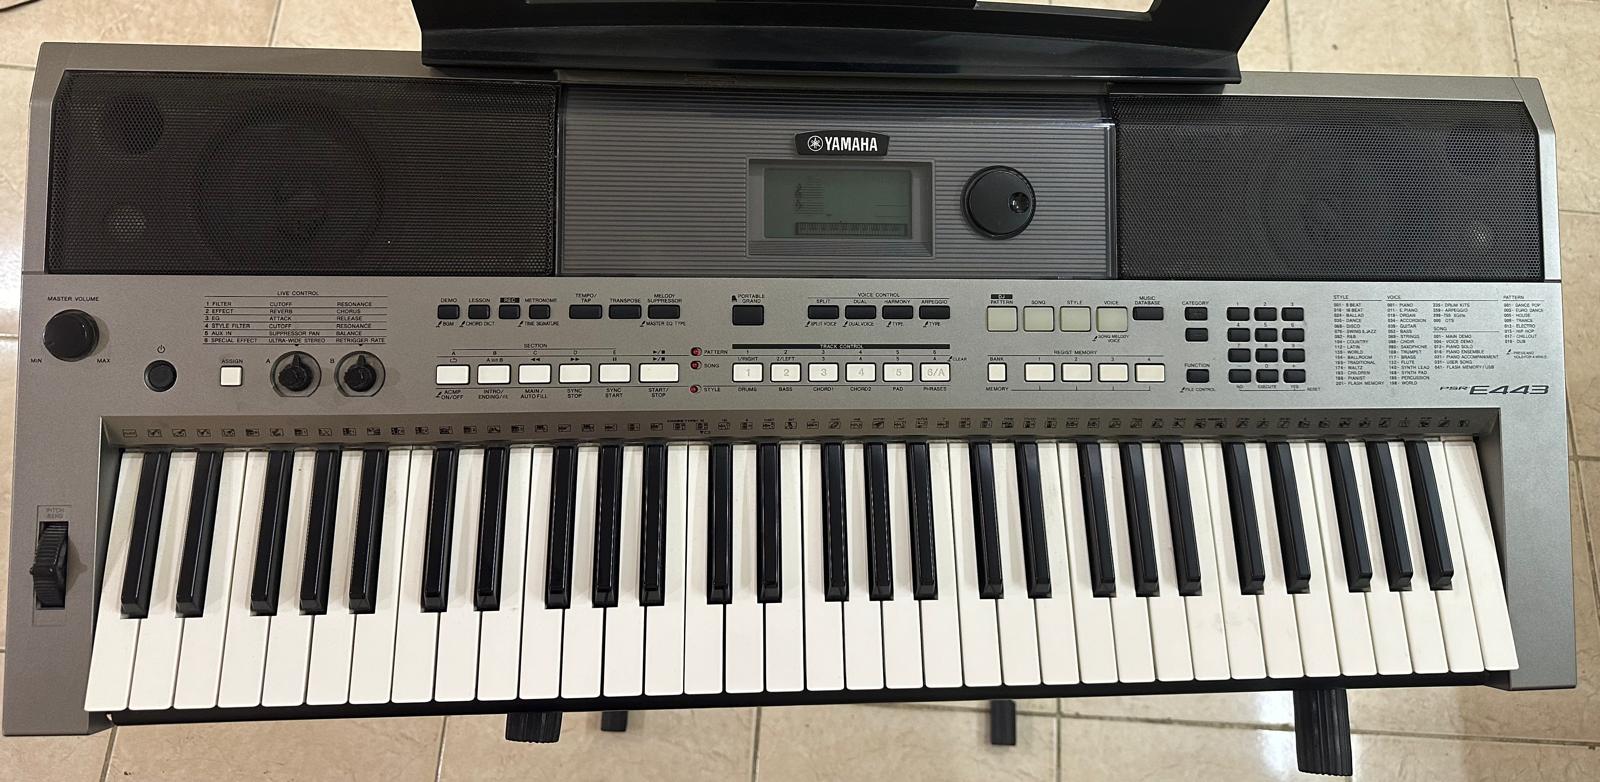 Yamaha - Piano Keyboard for Sale